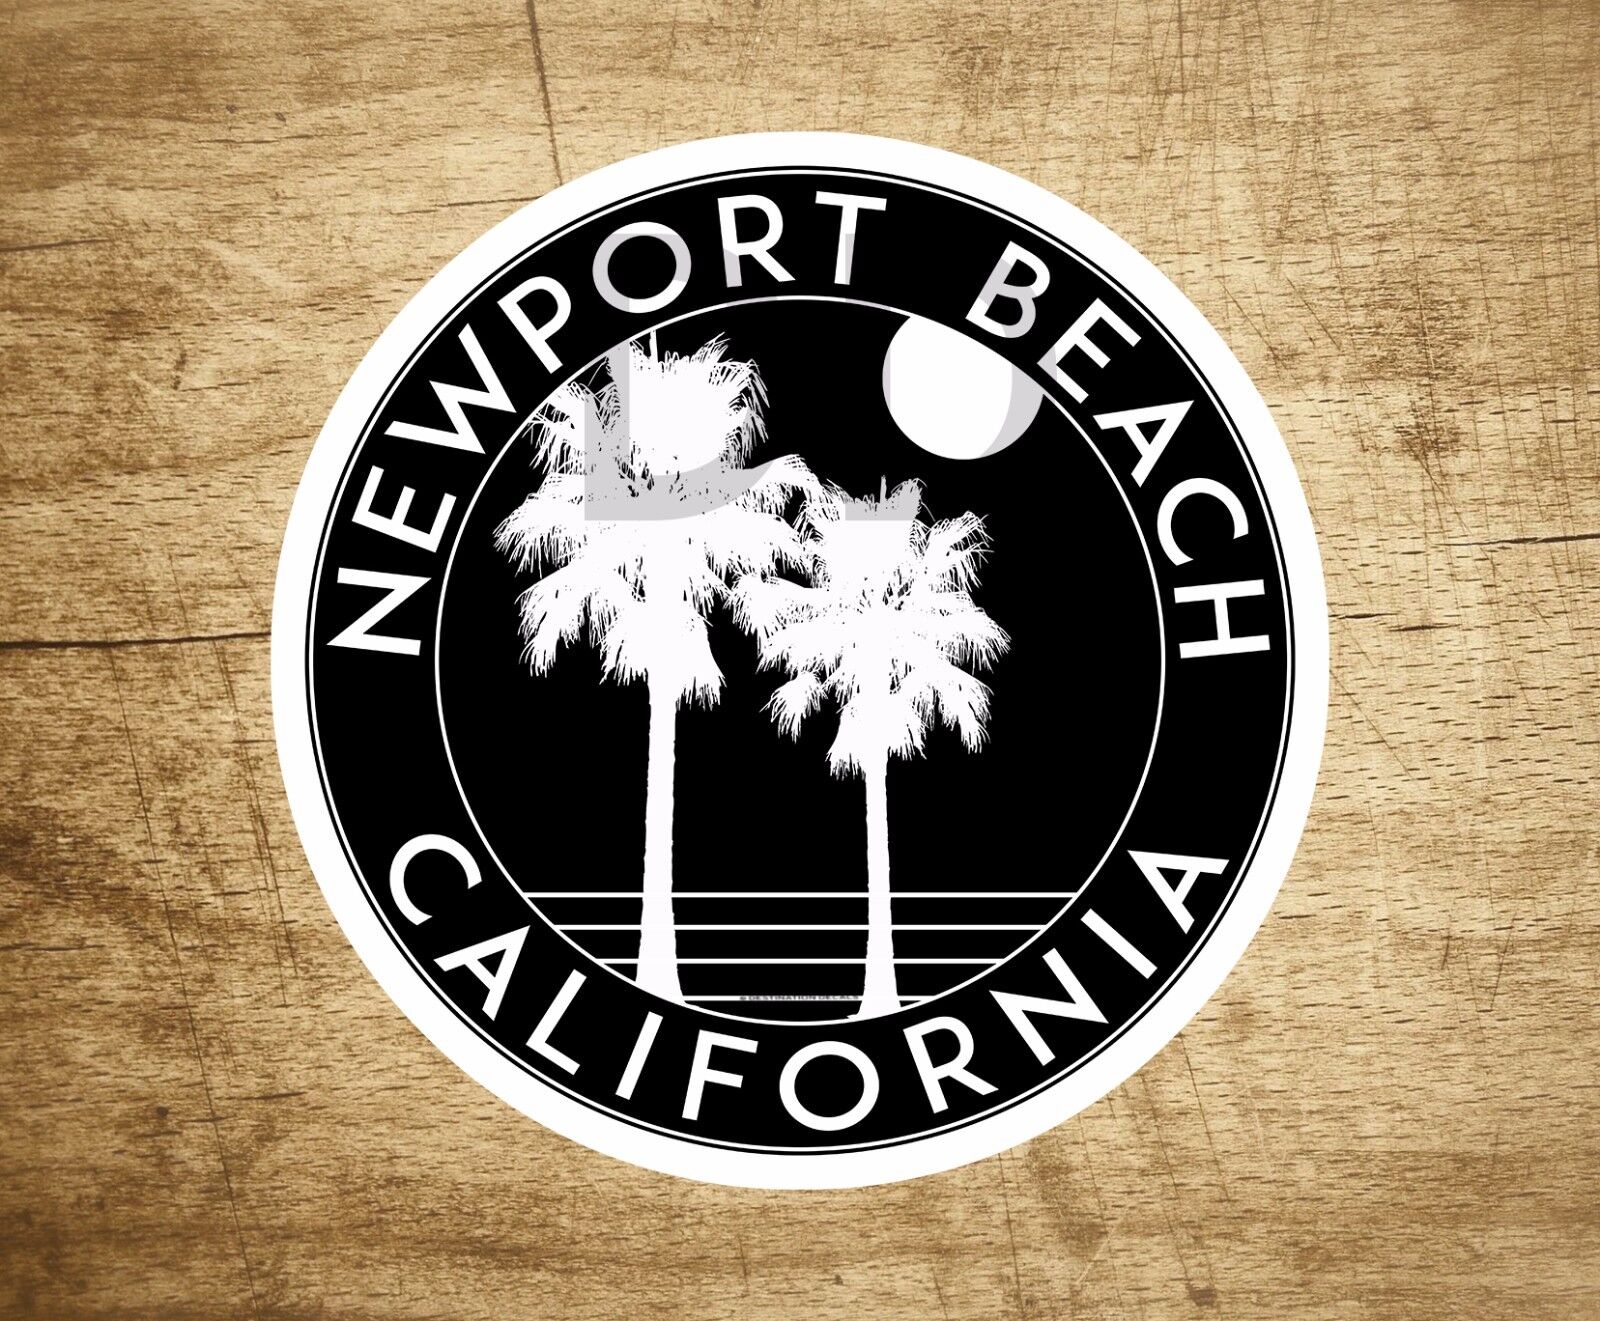 Newport Beach California Sticker Decal Beach Ocean Surfing Vinyl 3